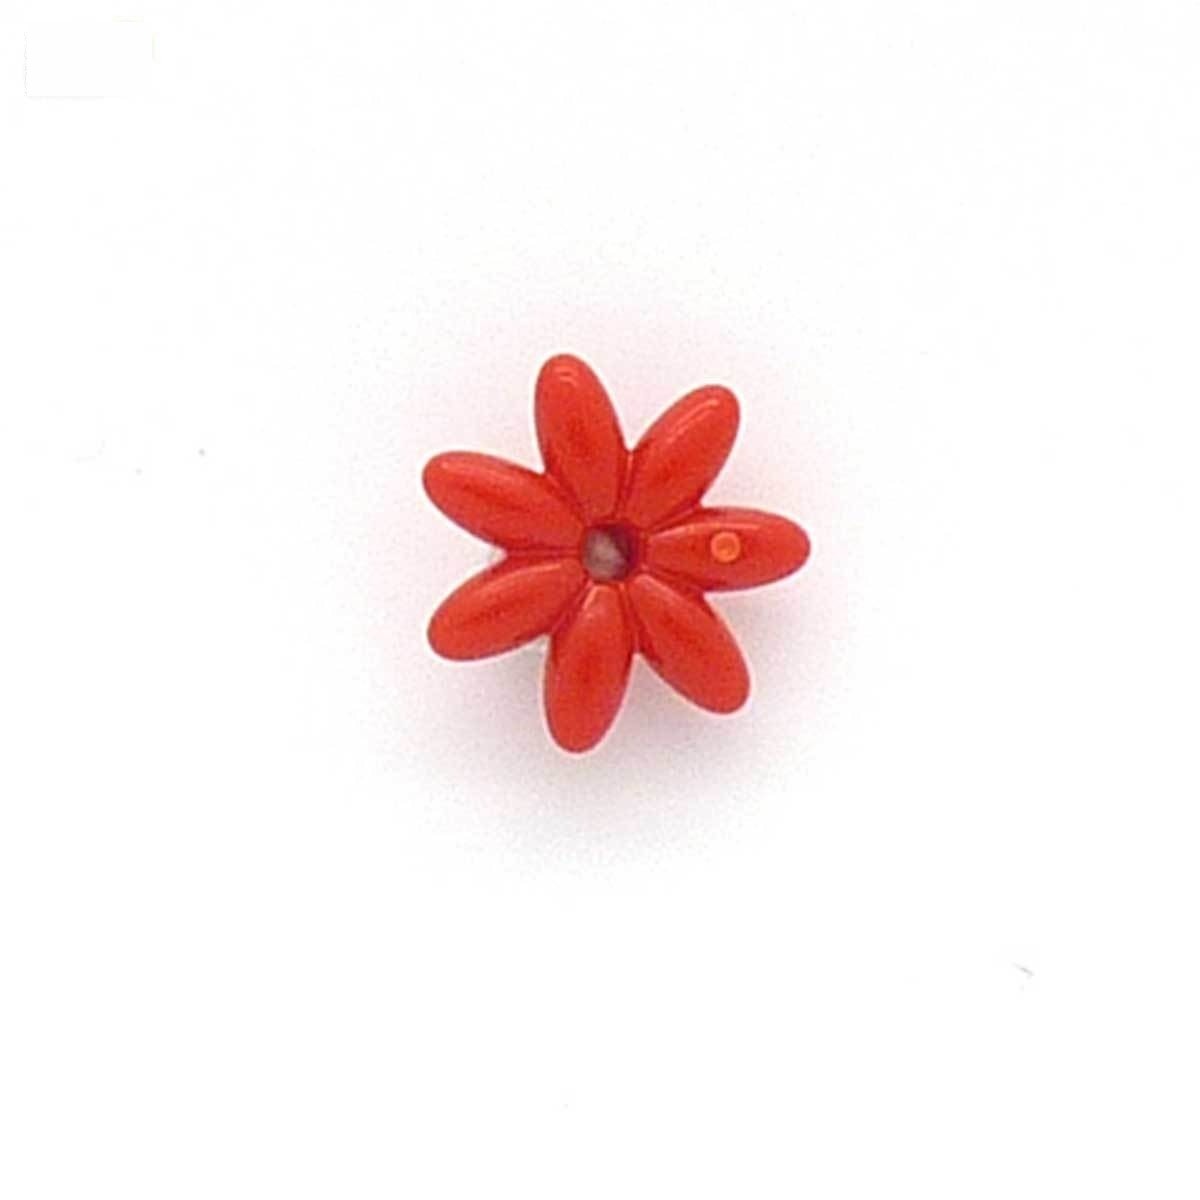 LEGO Red Daisy Flower - LEGO Minifigure Accessory